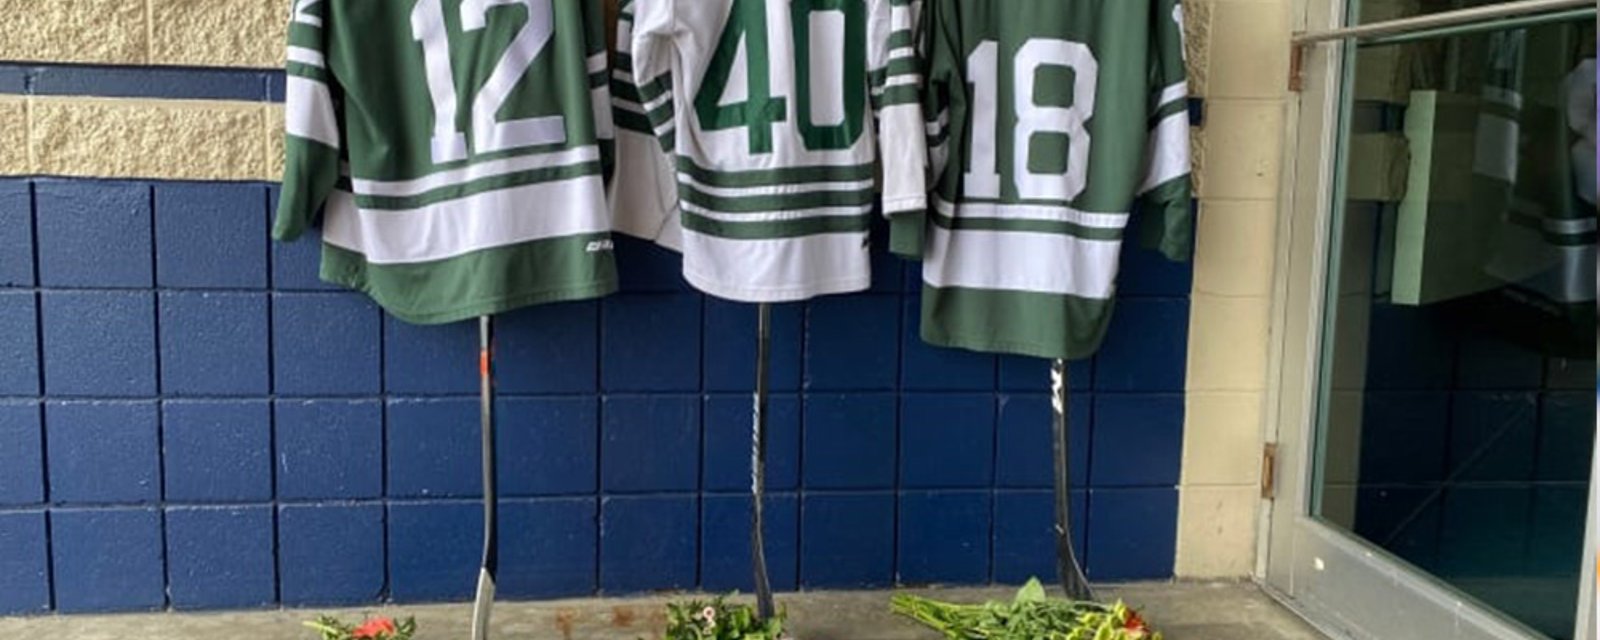 British Columbia's junior hockey community mourns tragic death of three young players 